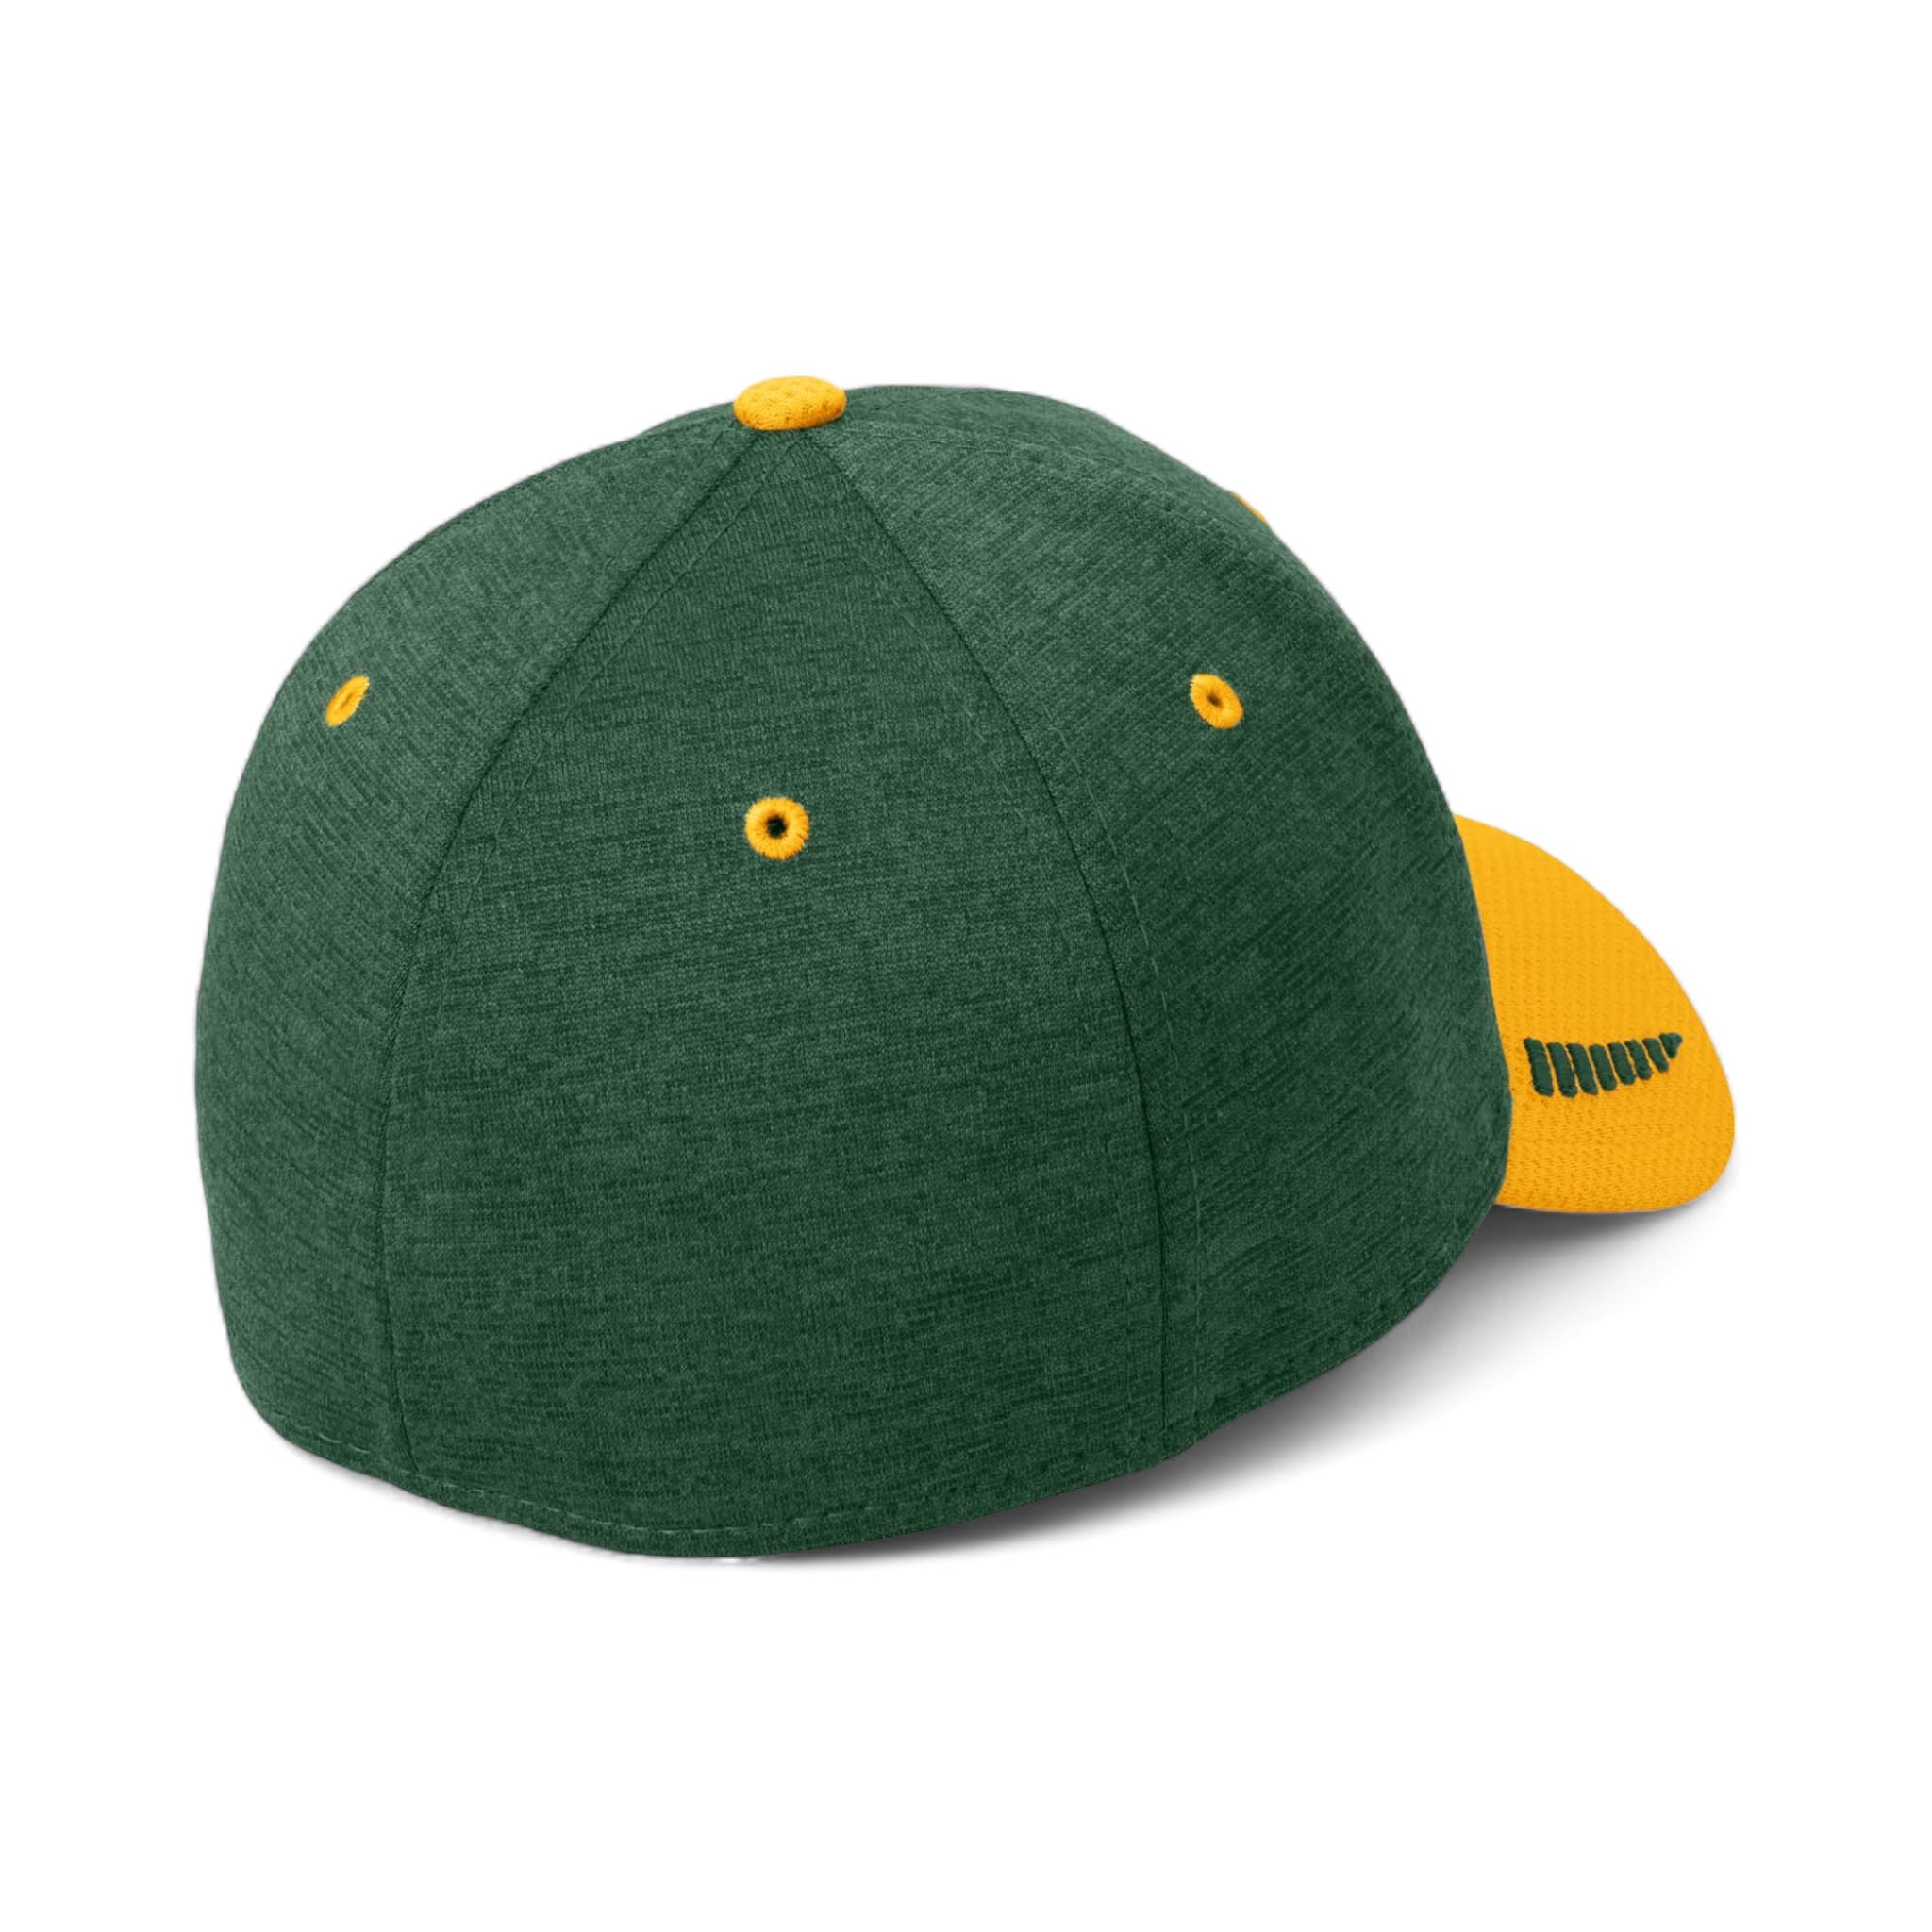 Back view of New Era NE704 custom hat in gold and dark green shadow heather